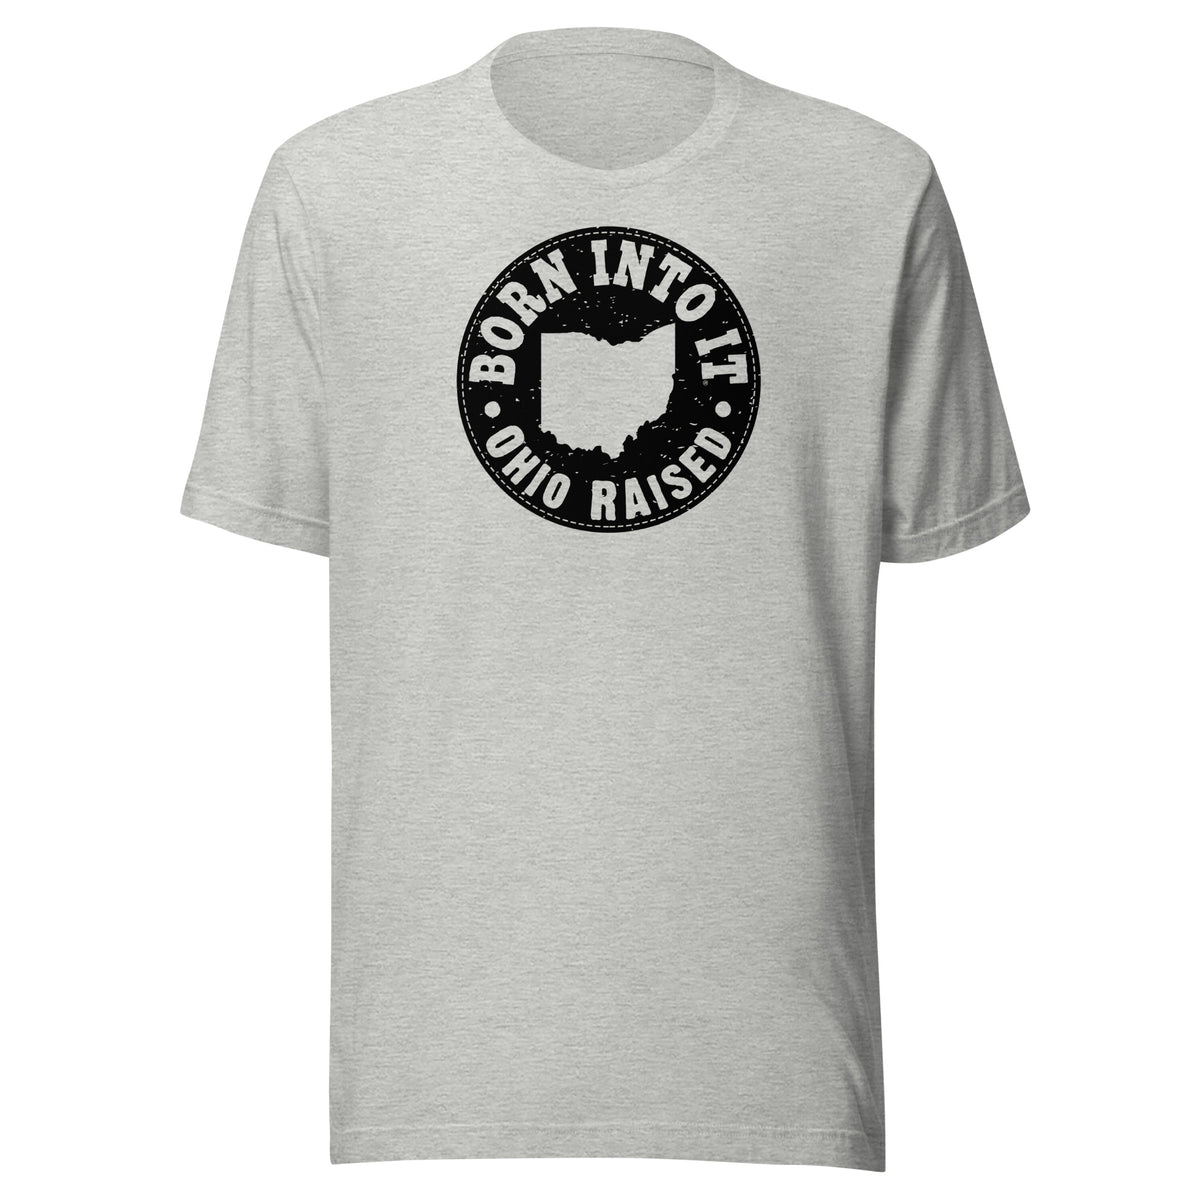 Ohio Raised Unisex T-Shirt